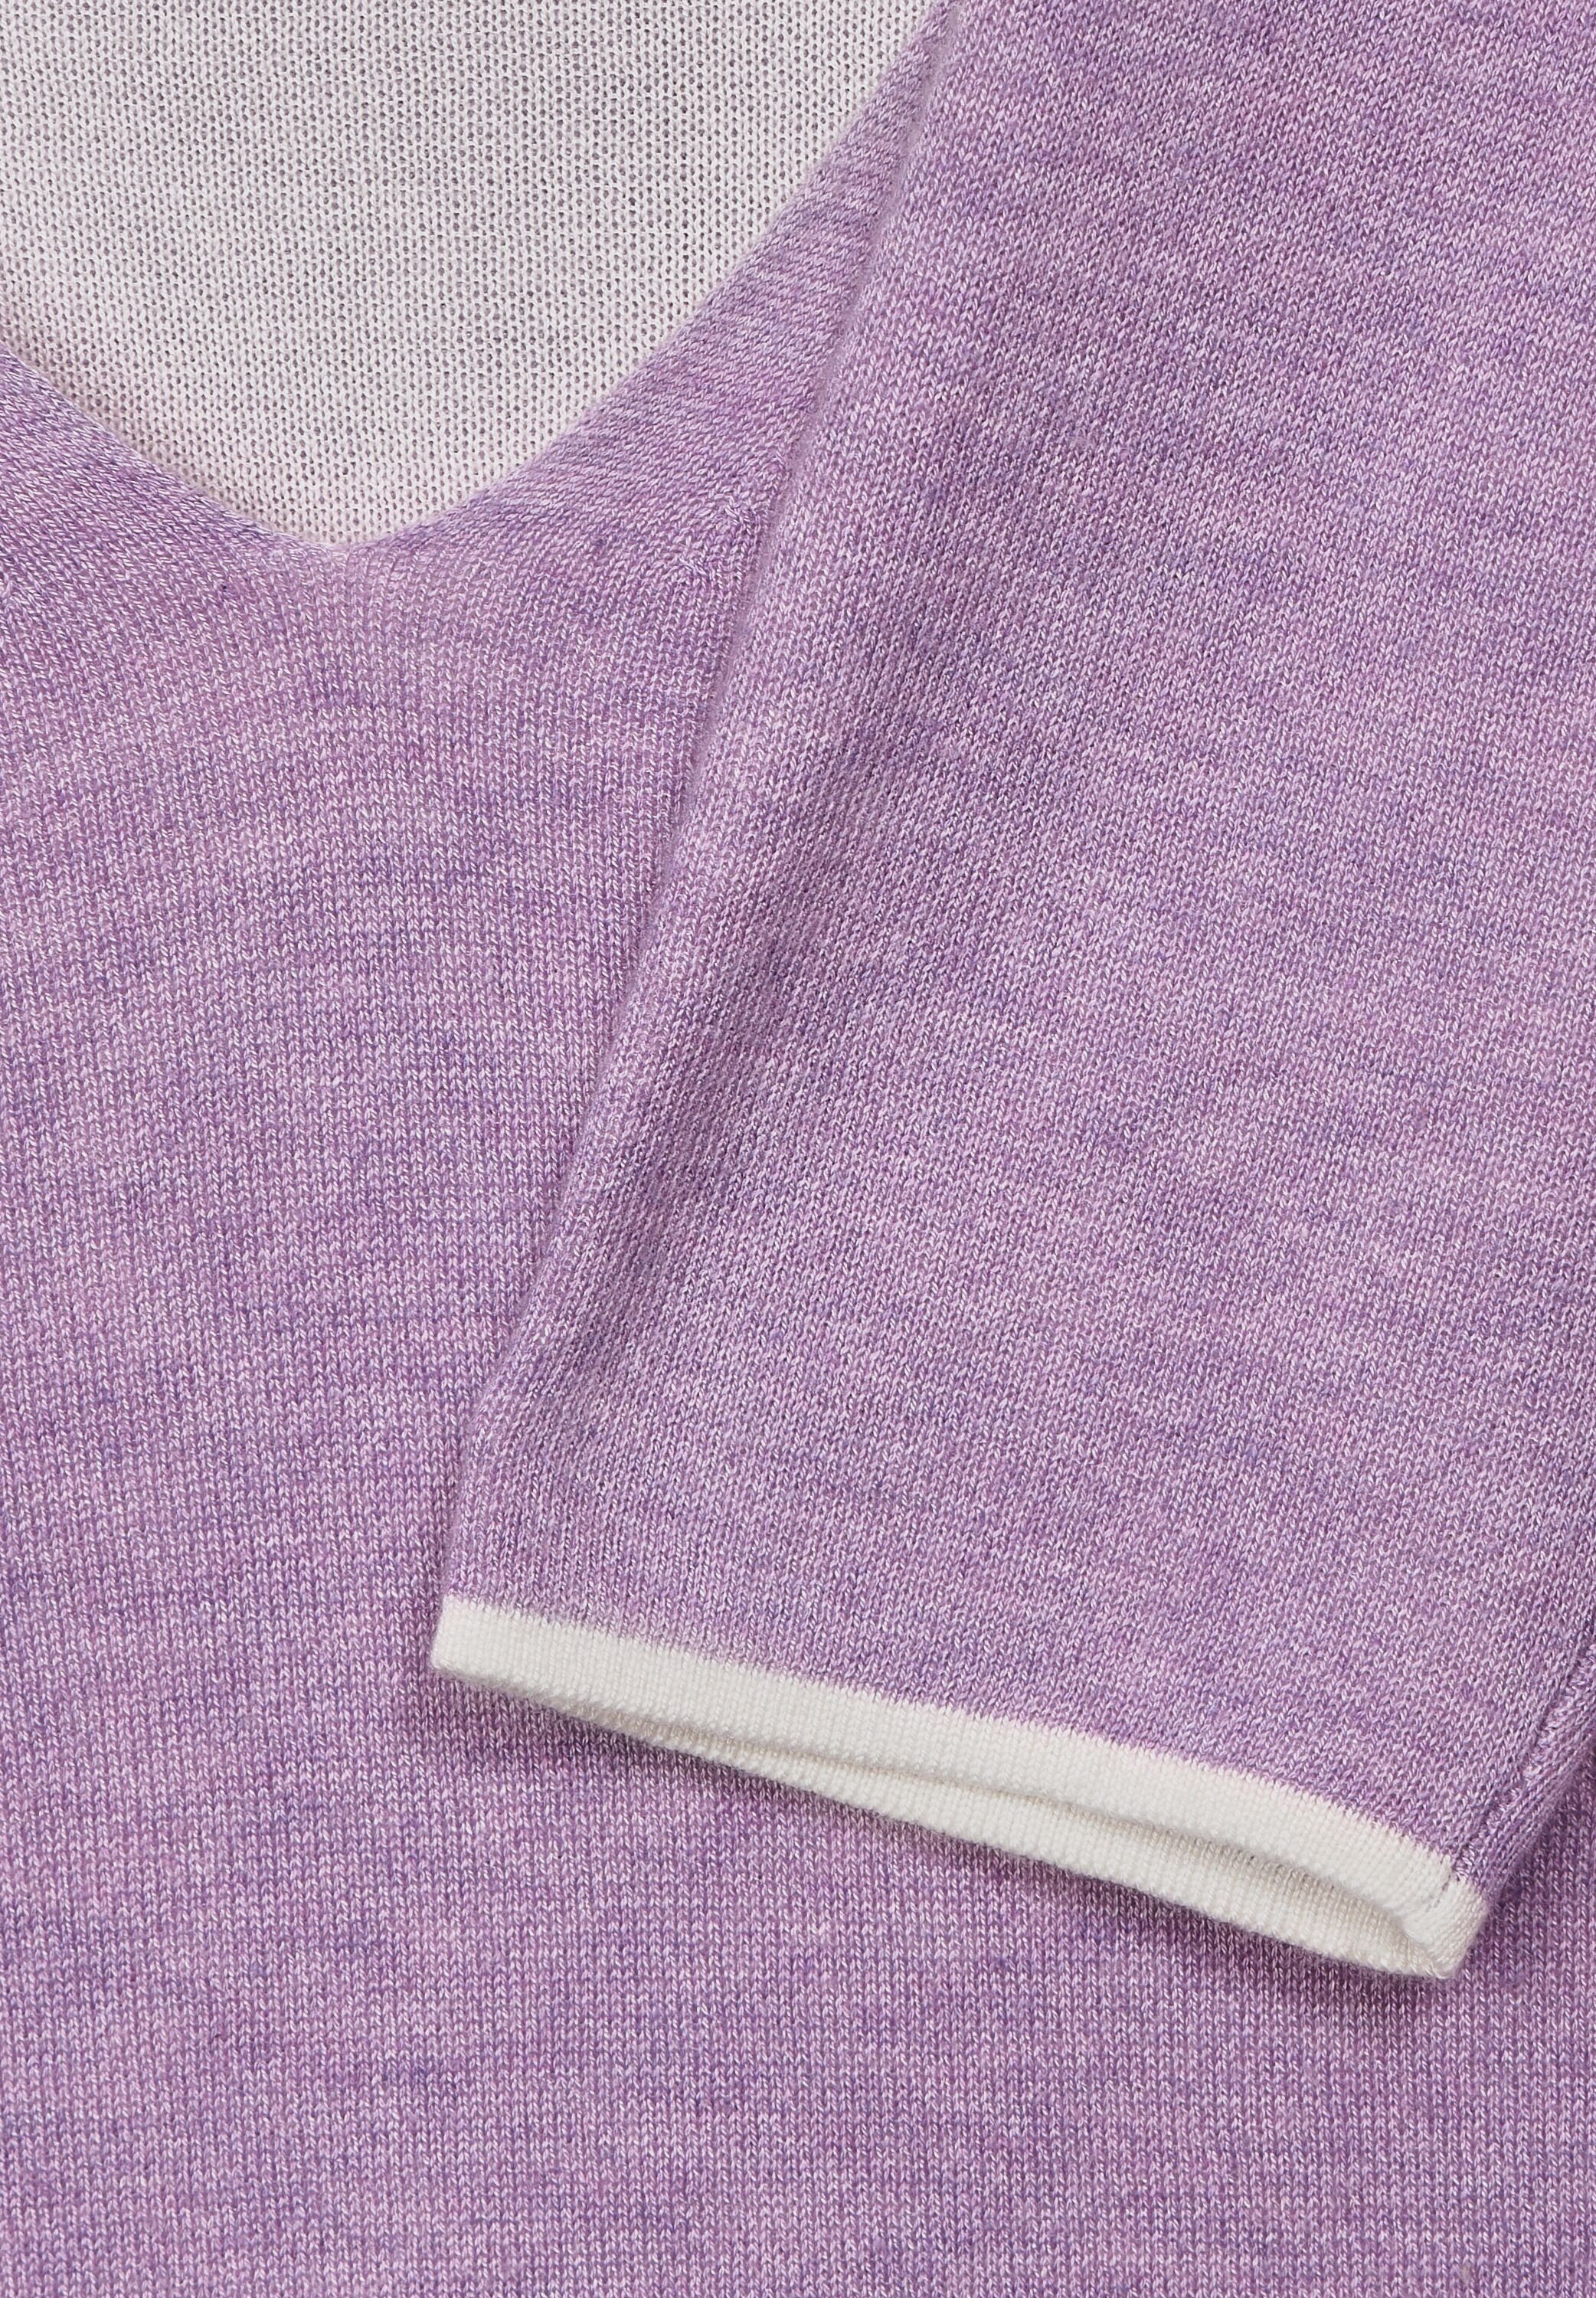 pure Pullover ONE V-Ausschnitt-Pullover V-Ausschnitt STREET melange mit lilac